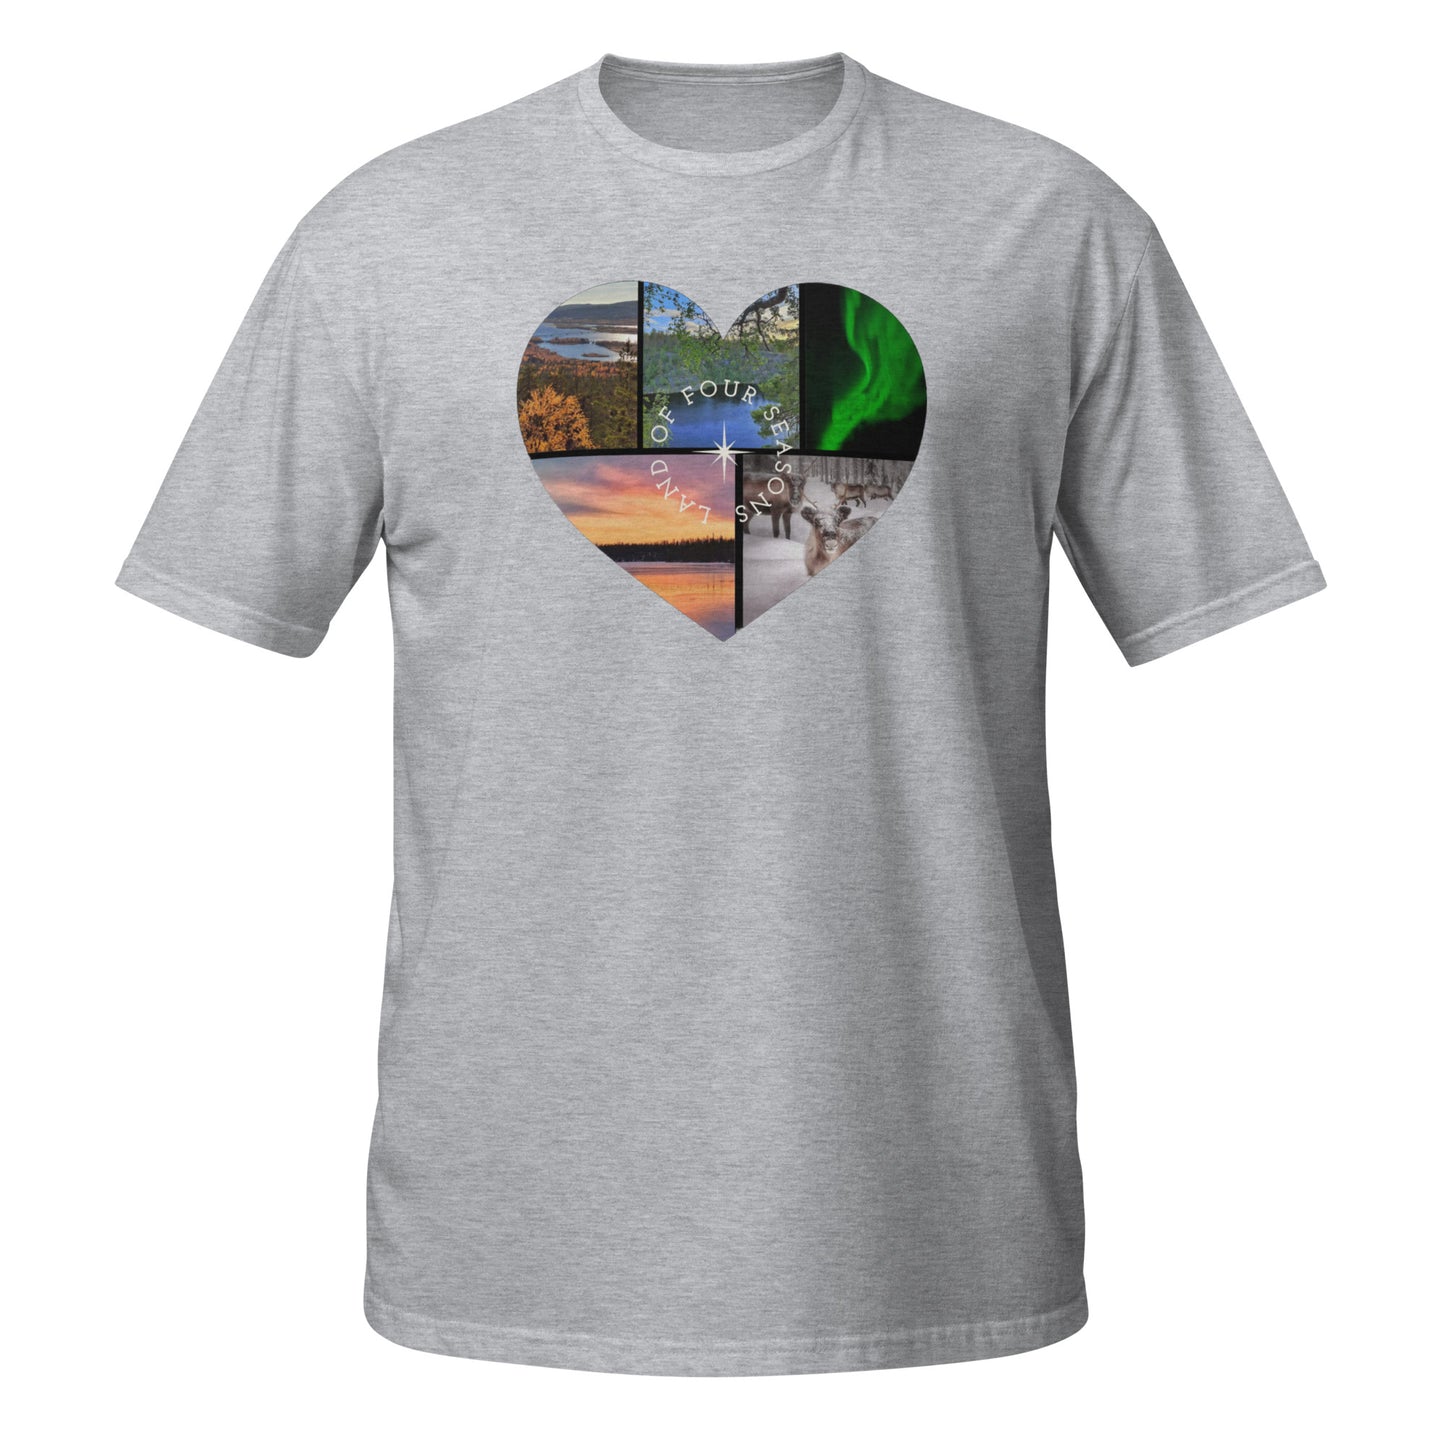 "Land of Four Seasons" unisex t-shirt